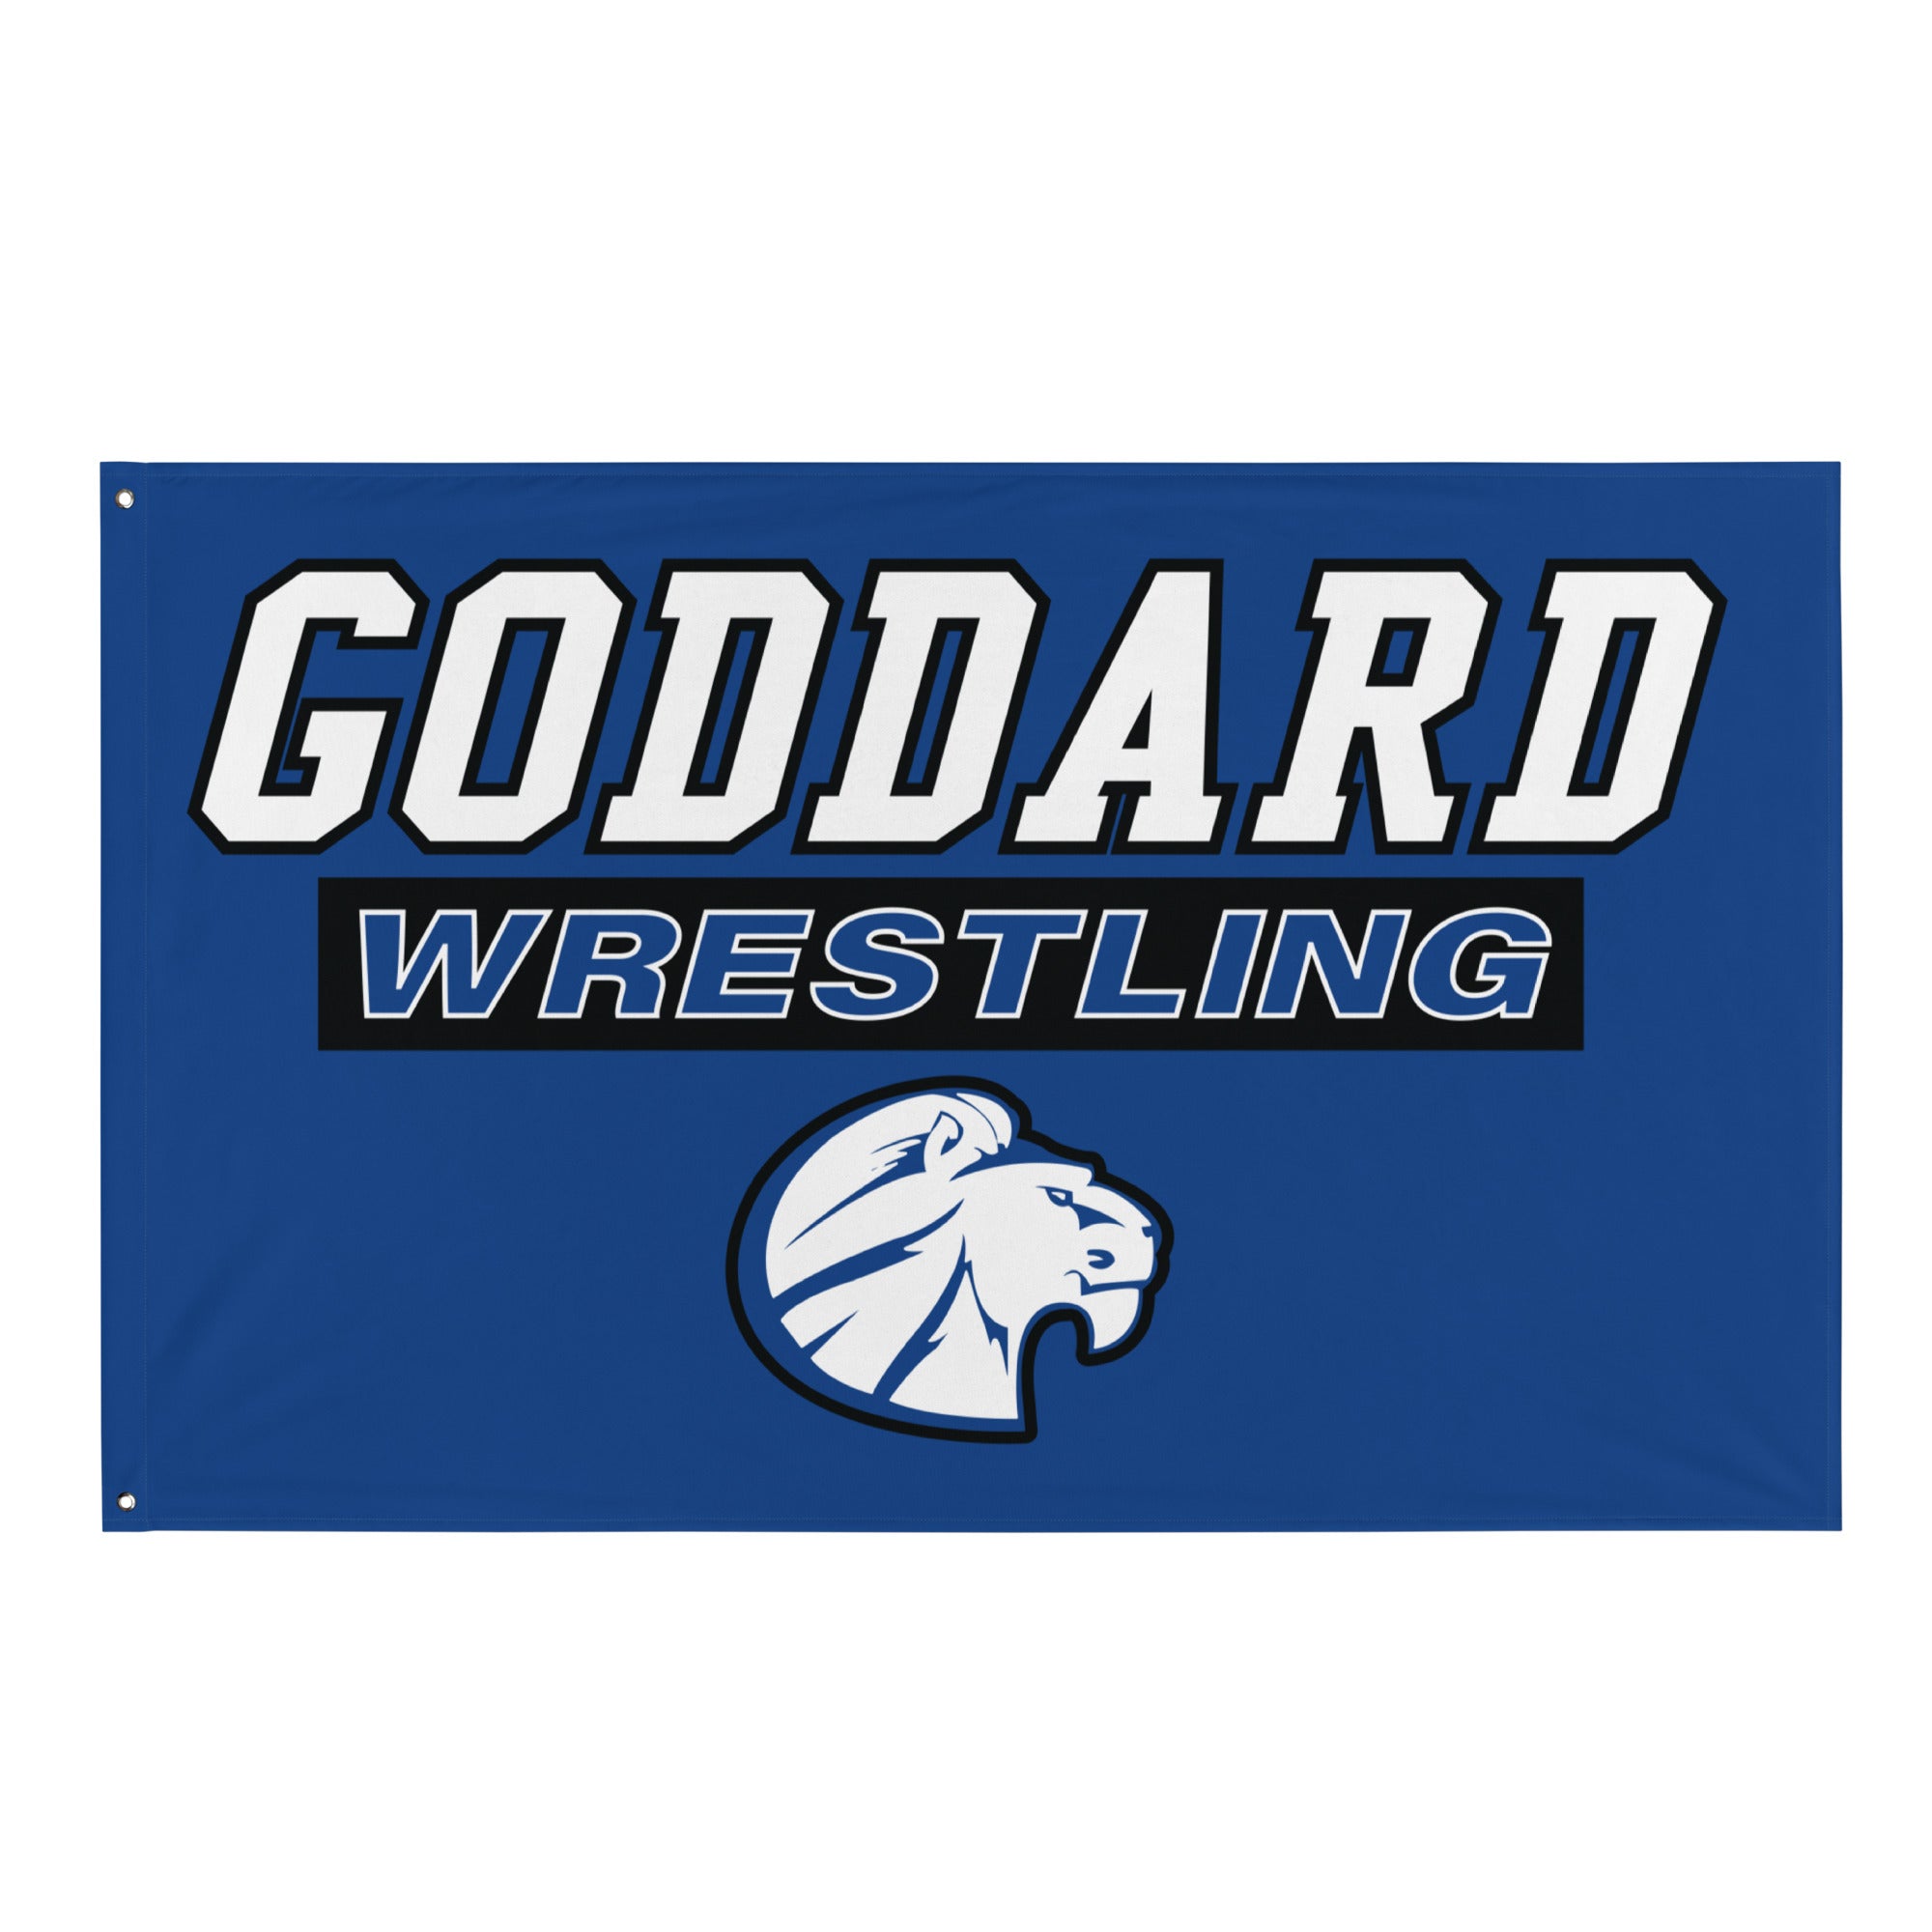 Goddard Wrestling Flag